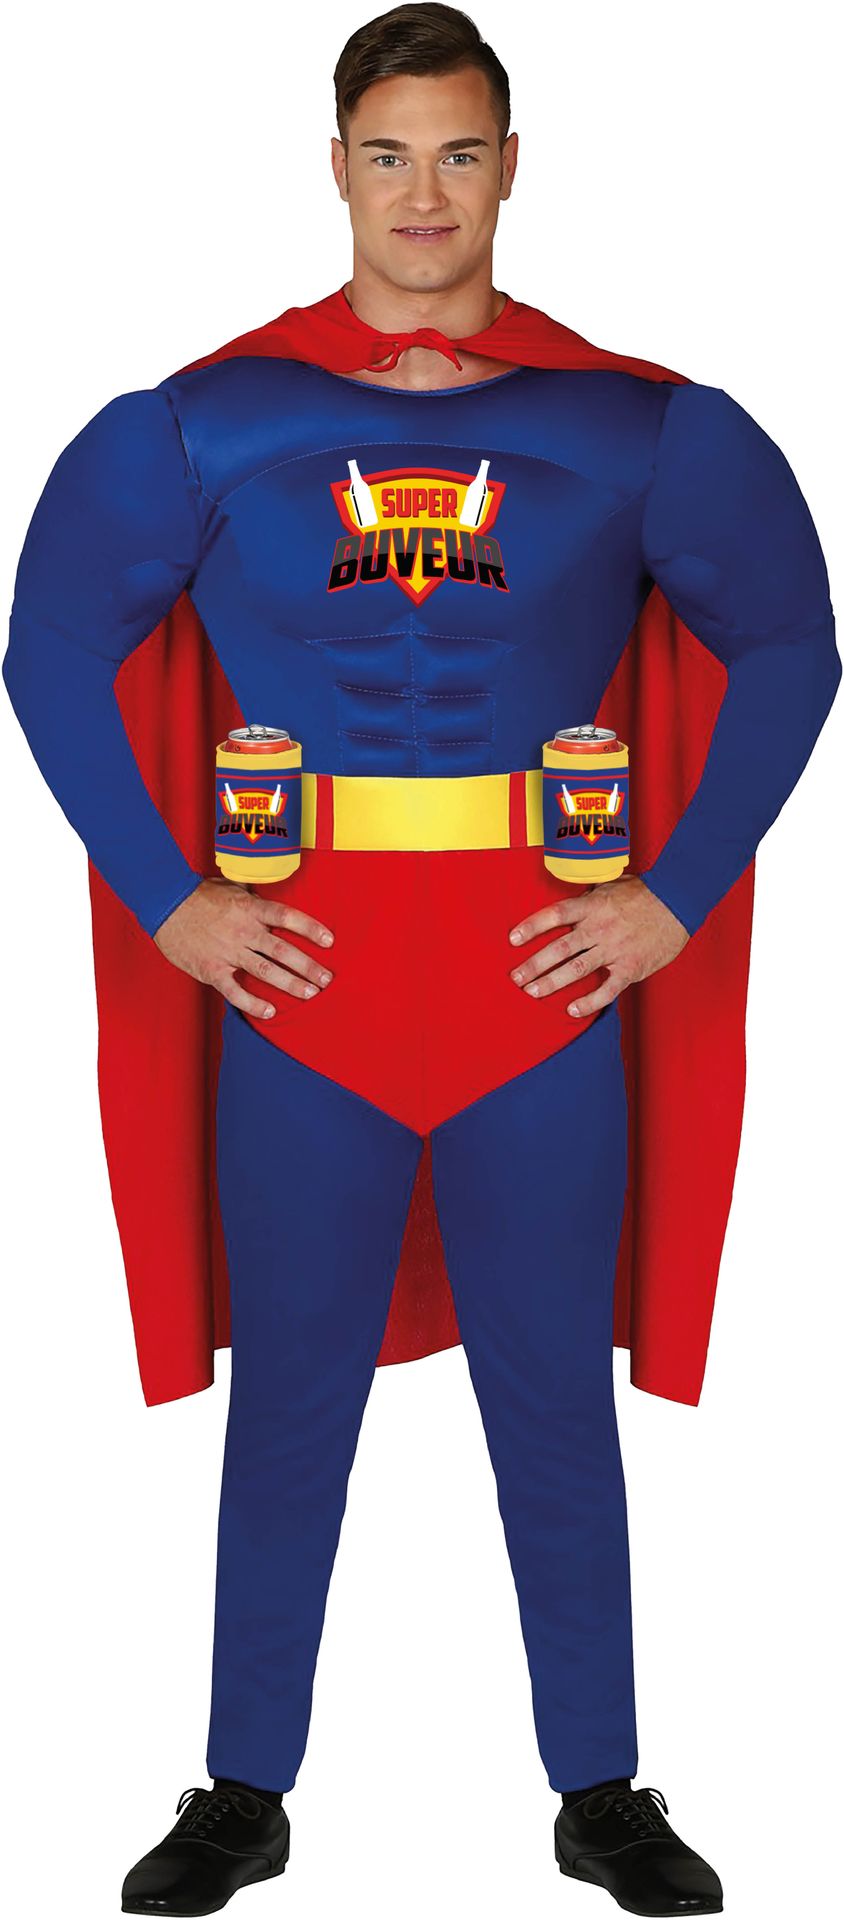 Super drinker superheld kostuum man